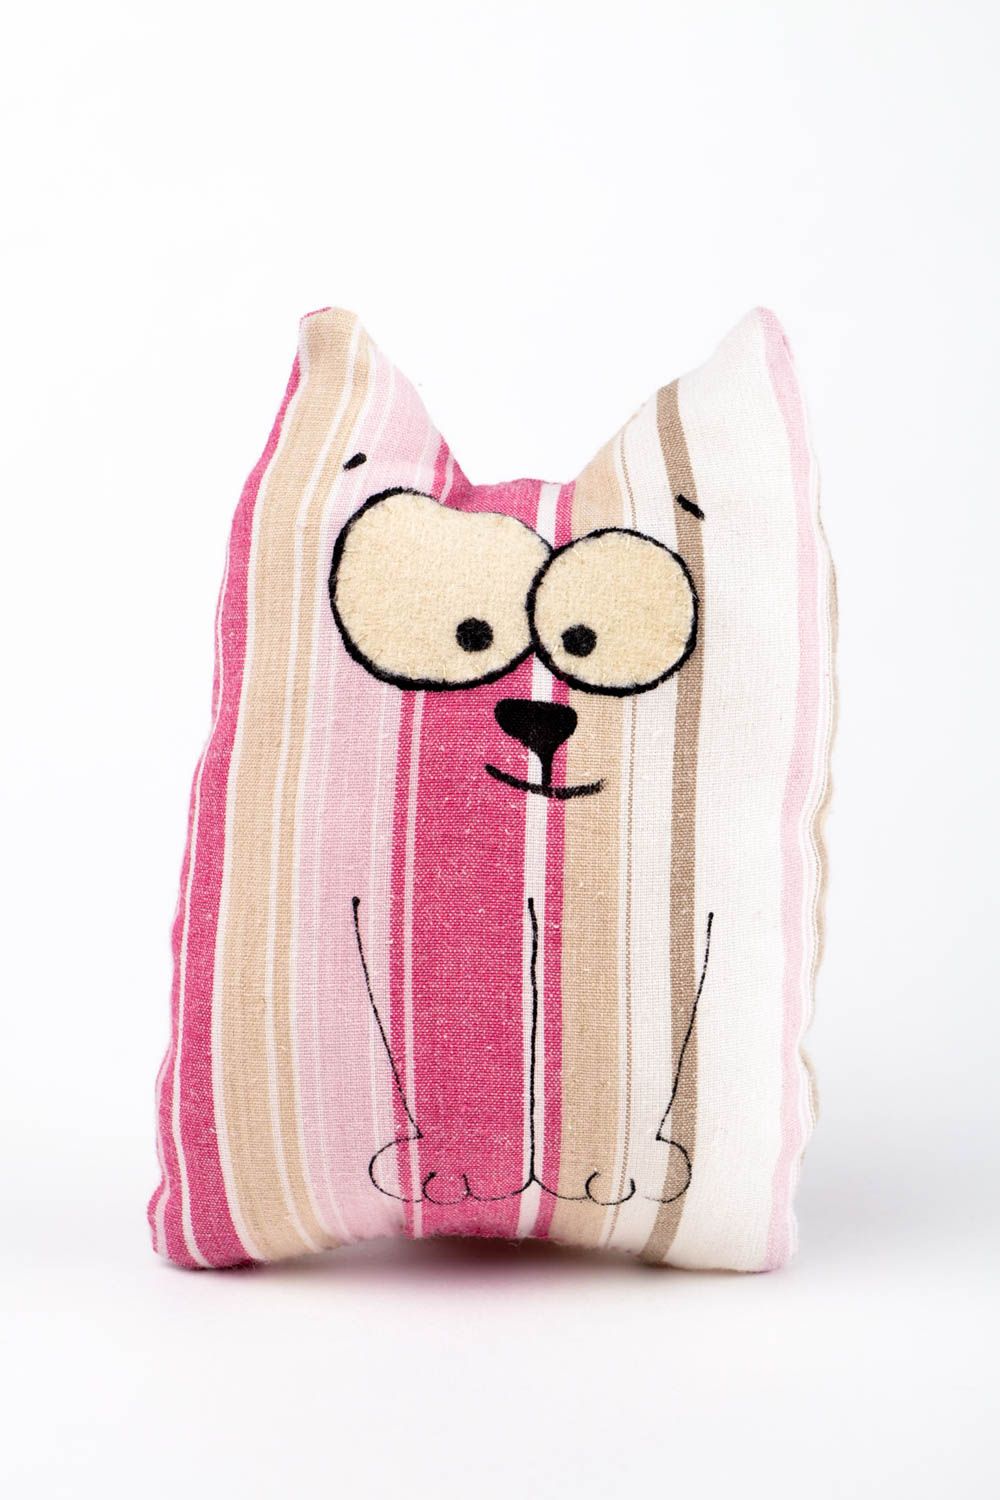 Handmade textile cute toy unusual cat stylish toy interior decor ideas photo 3